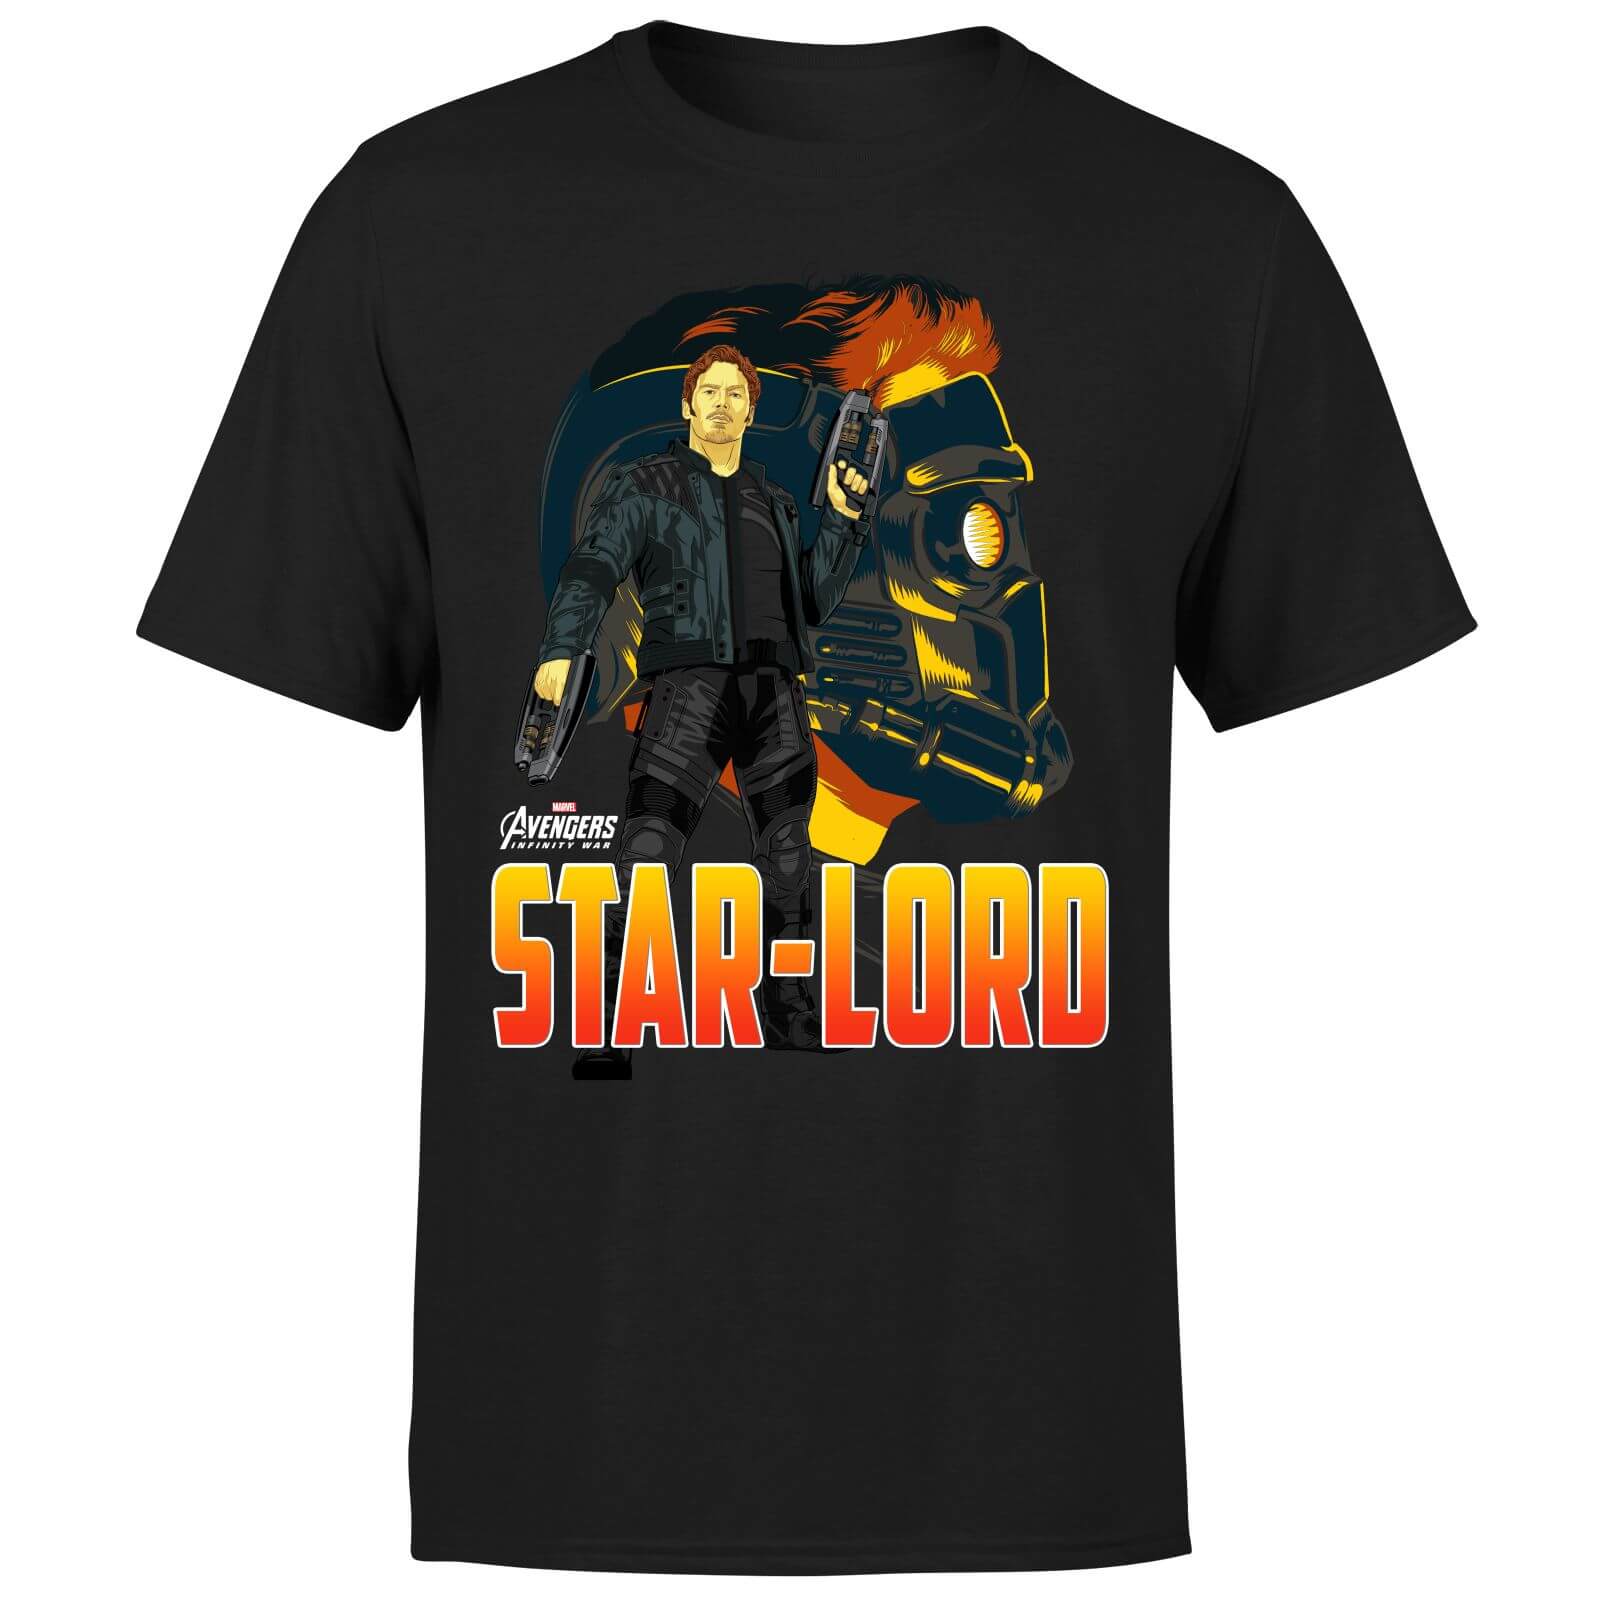 Avengers Star-Lord Men's T-Shirt - Black - S